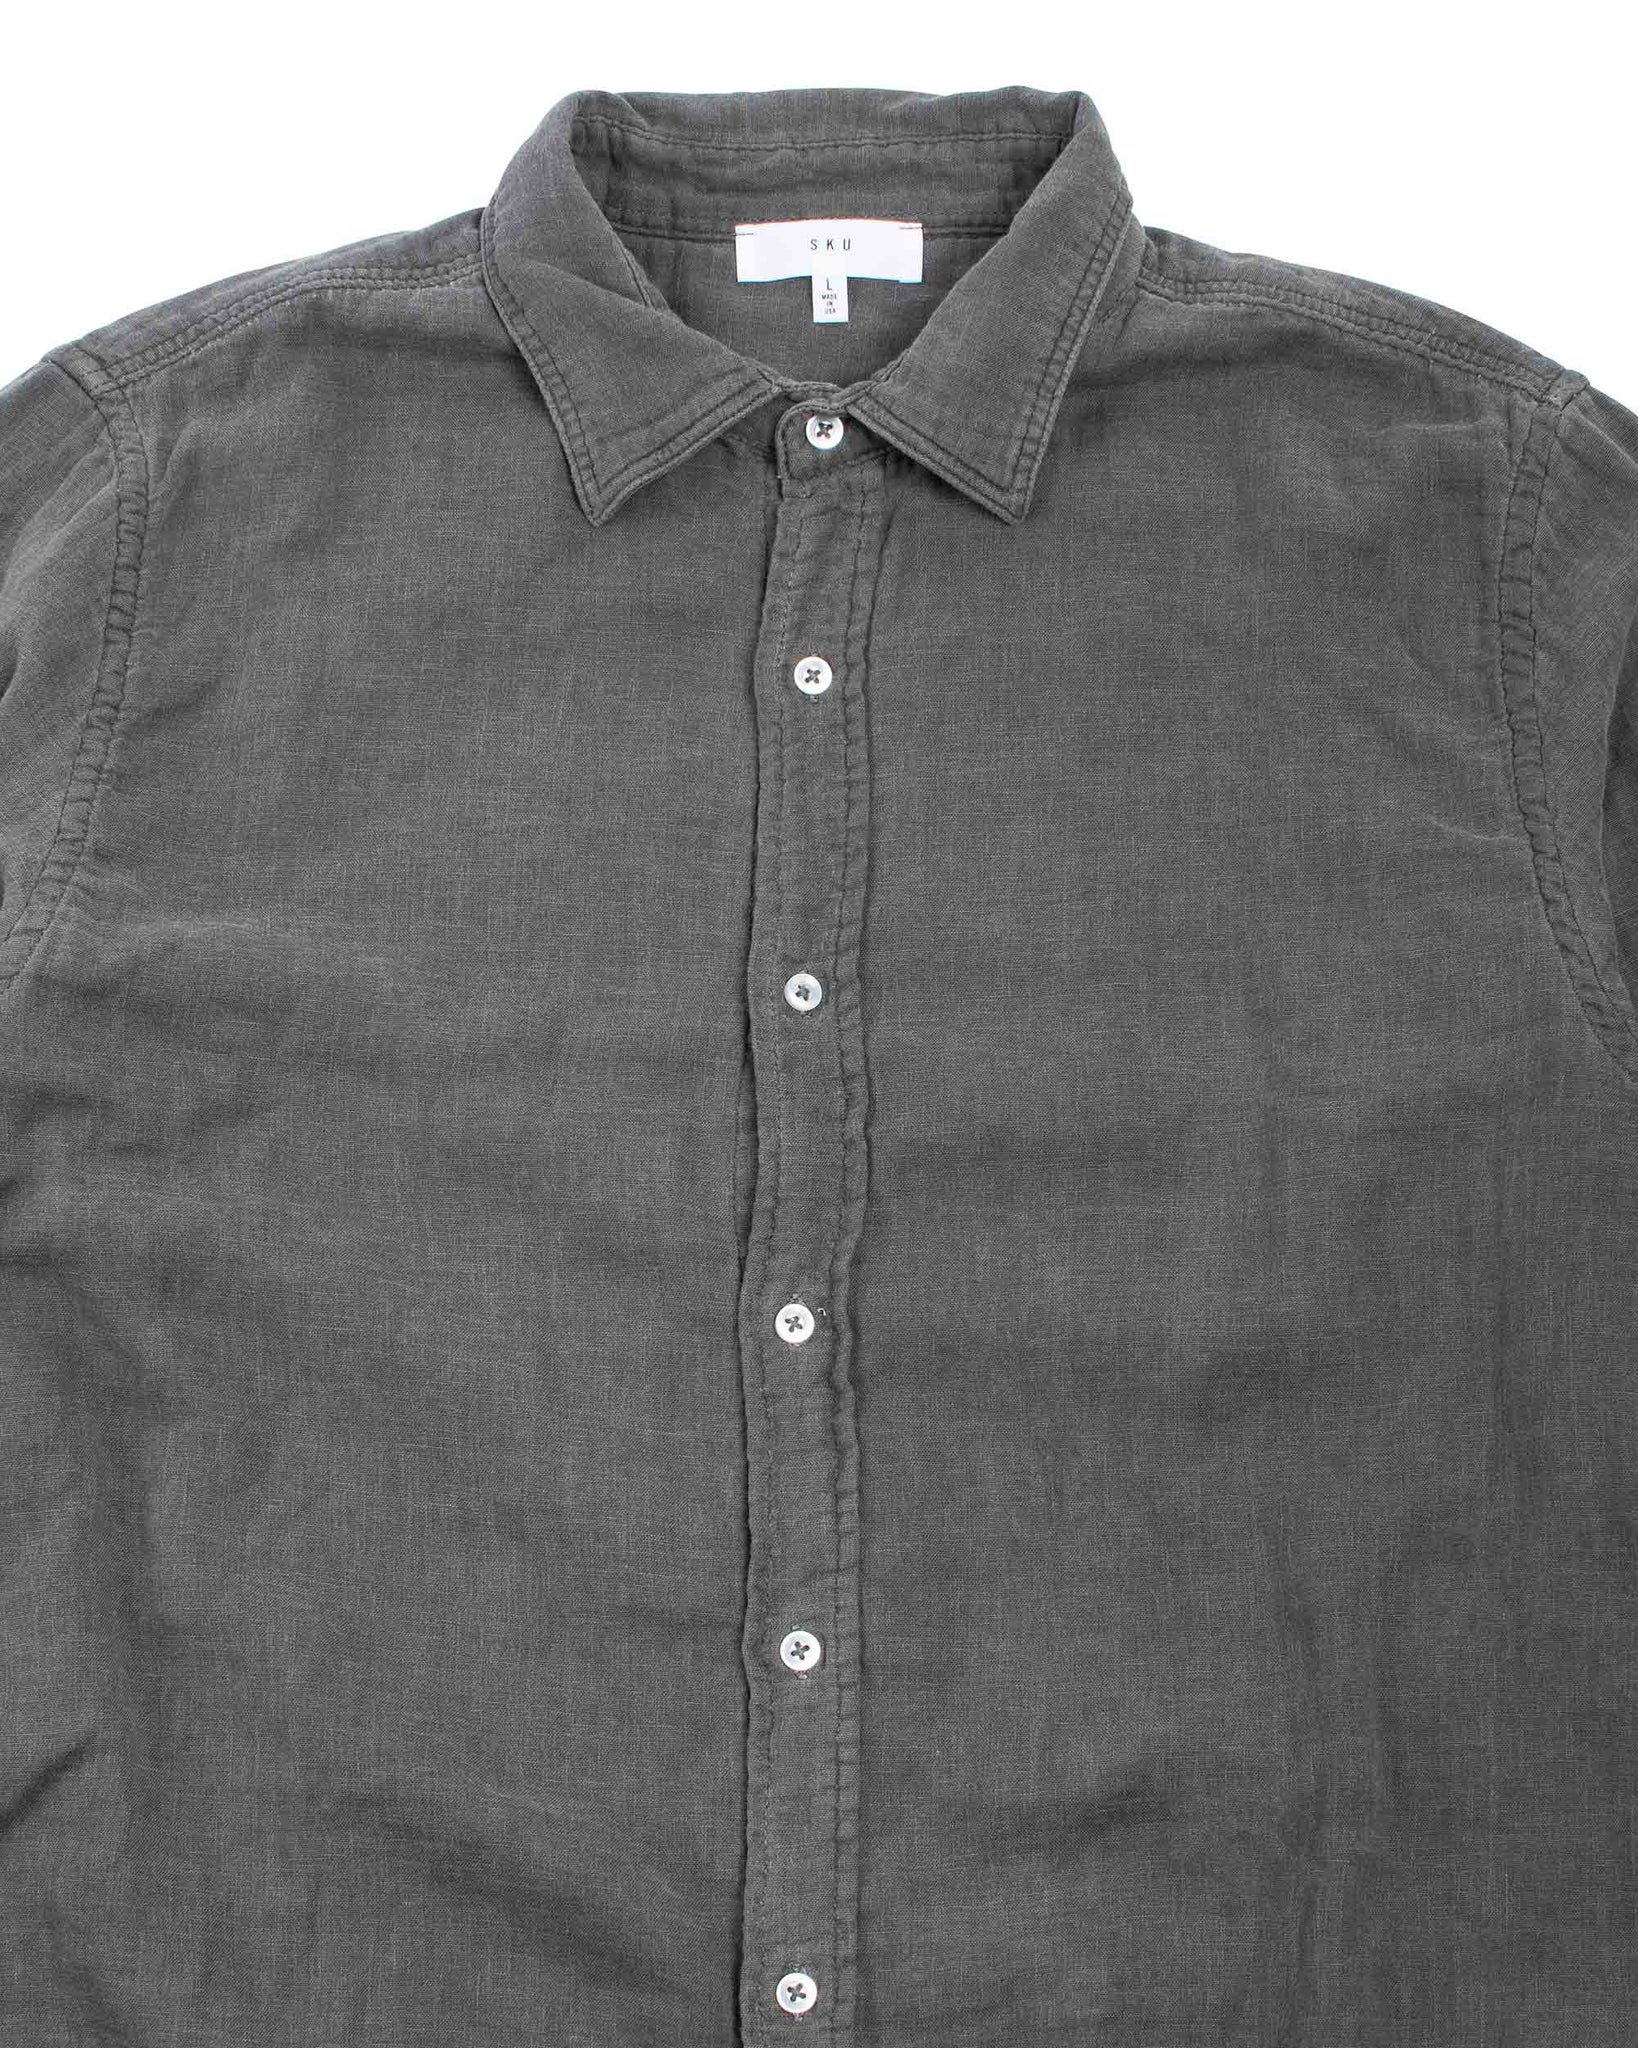 Save Khaki United Triple Gauze Easy Shirt Black Details